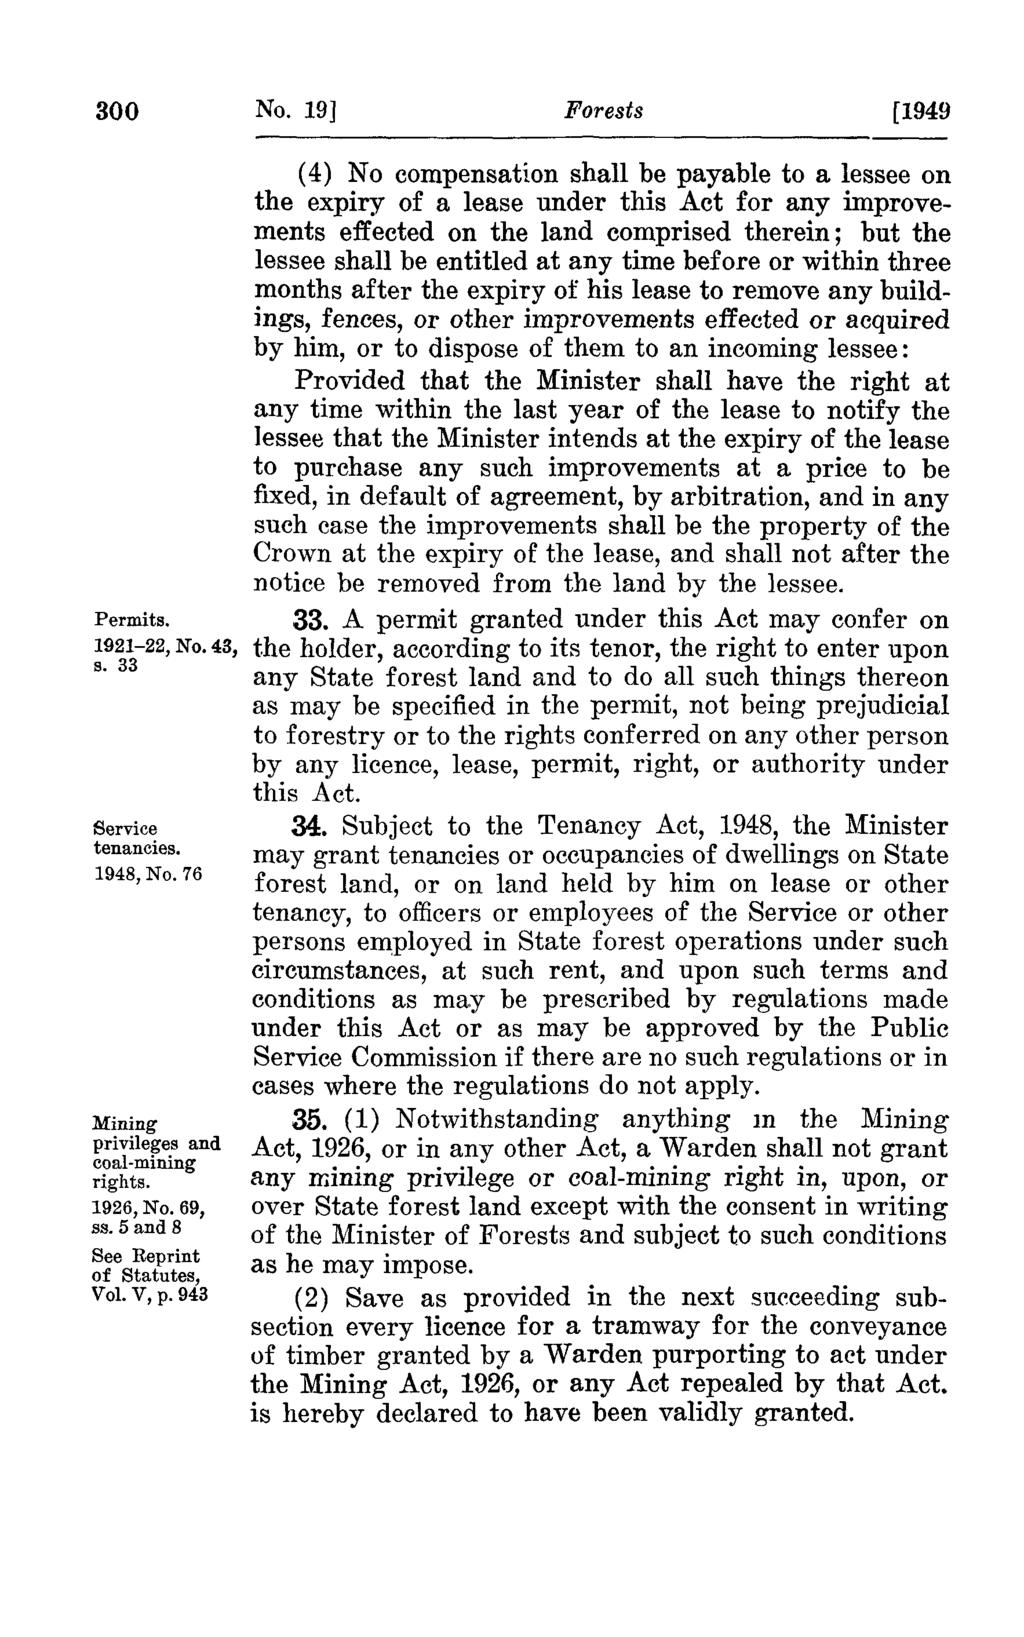 300 No. 19] Forests [1949 Permits. 1921-22, No. 43, s. 33 Service tenancies. 1948, No. 76 Mining privileges and coal-mining rights. 1926, No. 69, ss. 5 and 8 See Reprint of Statutes, Vol. V, p.